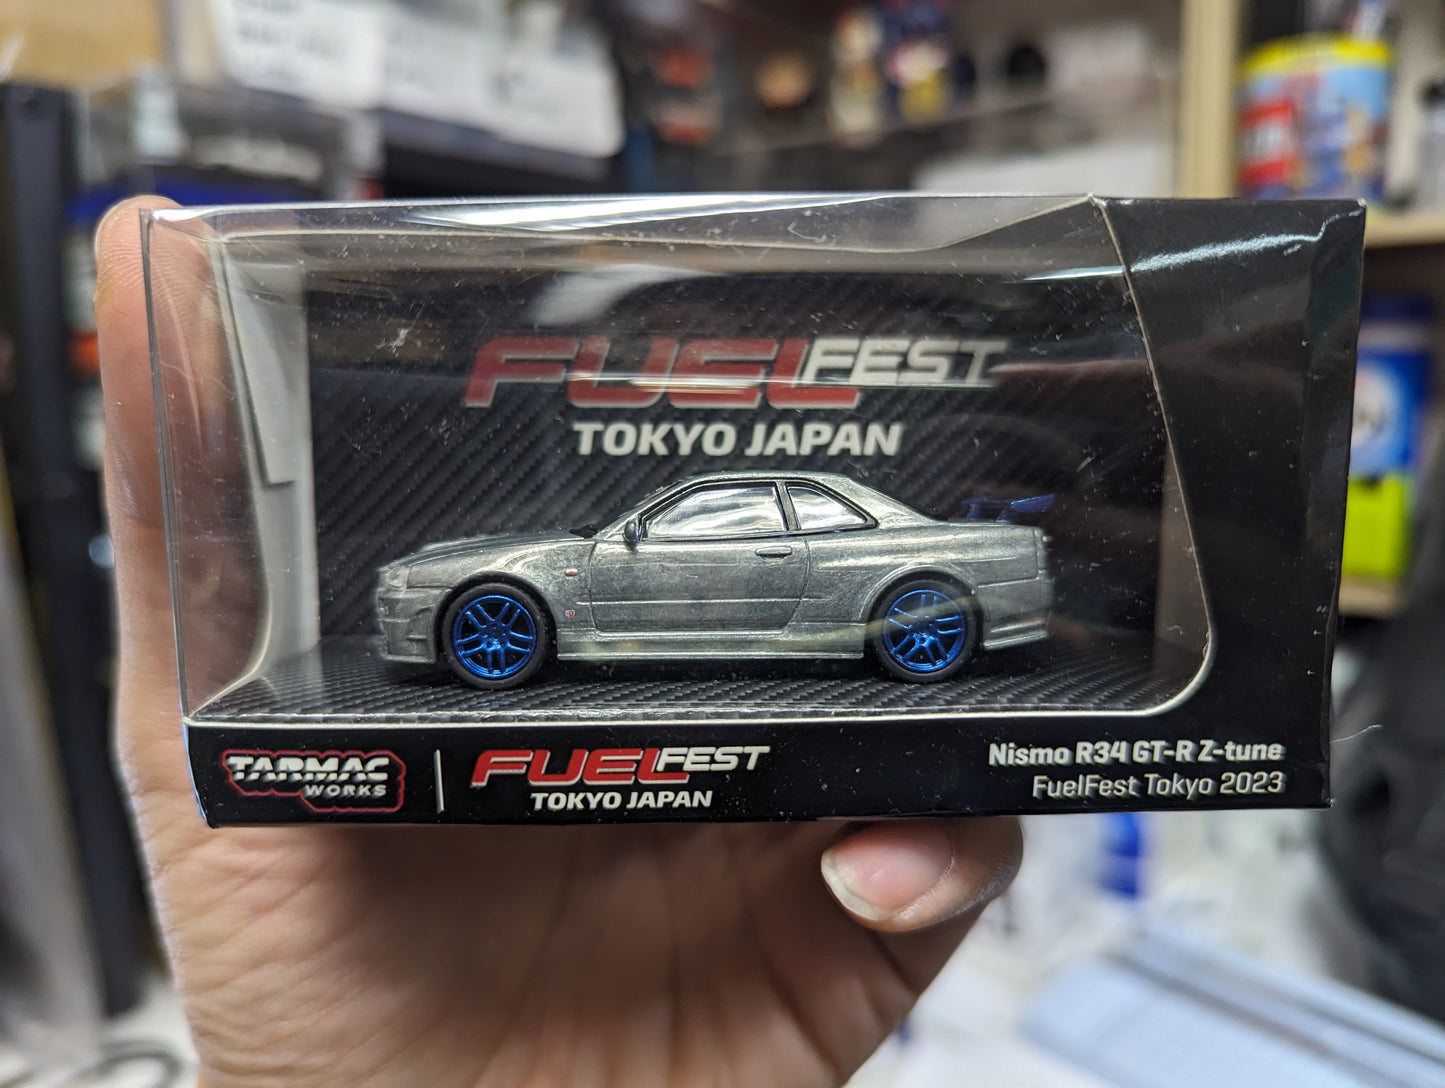 FuelFest Tokyo 2023 Special Edition Tarmac Works x Schuco 1:64 Scale Nissan Skyline Nismo R34 GT-R Z-tune